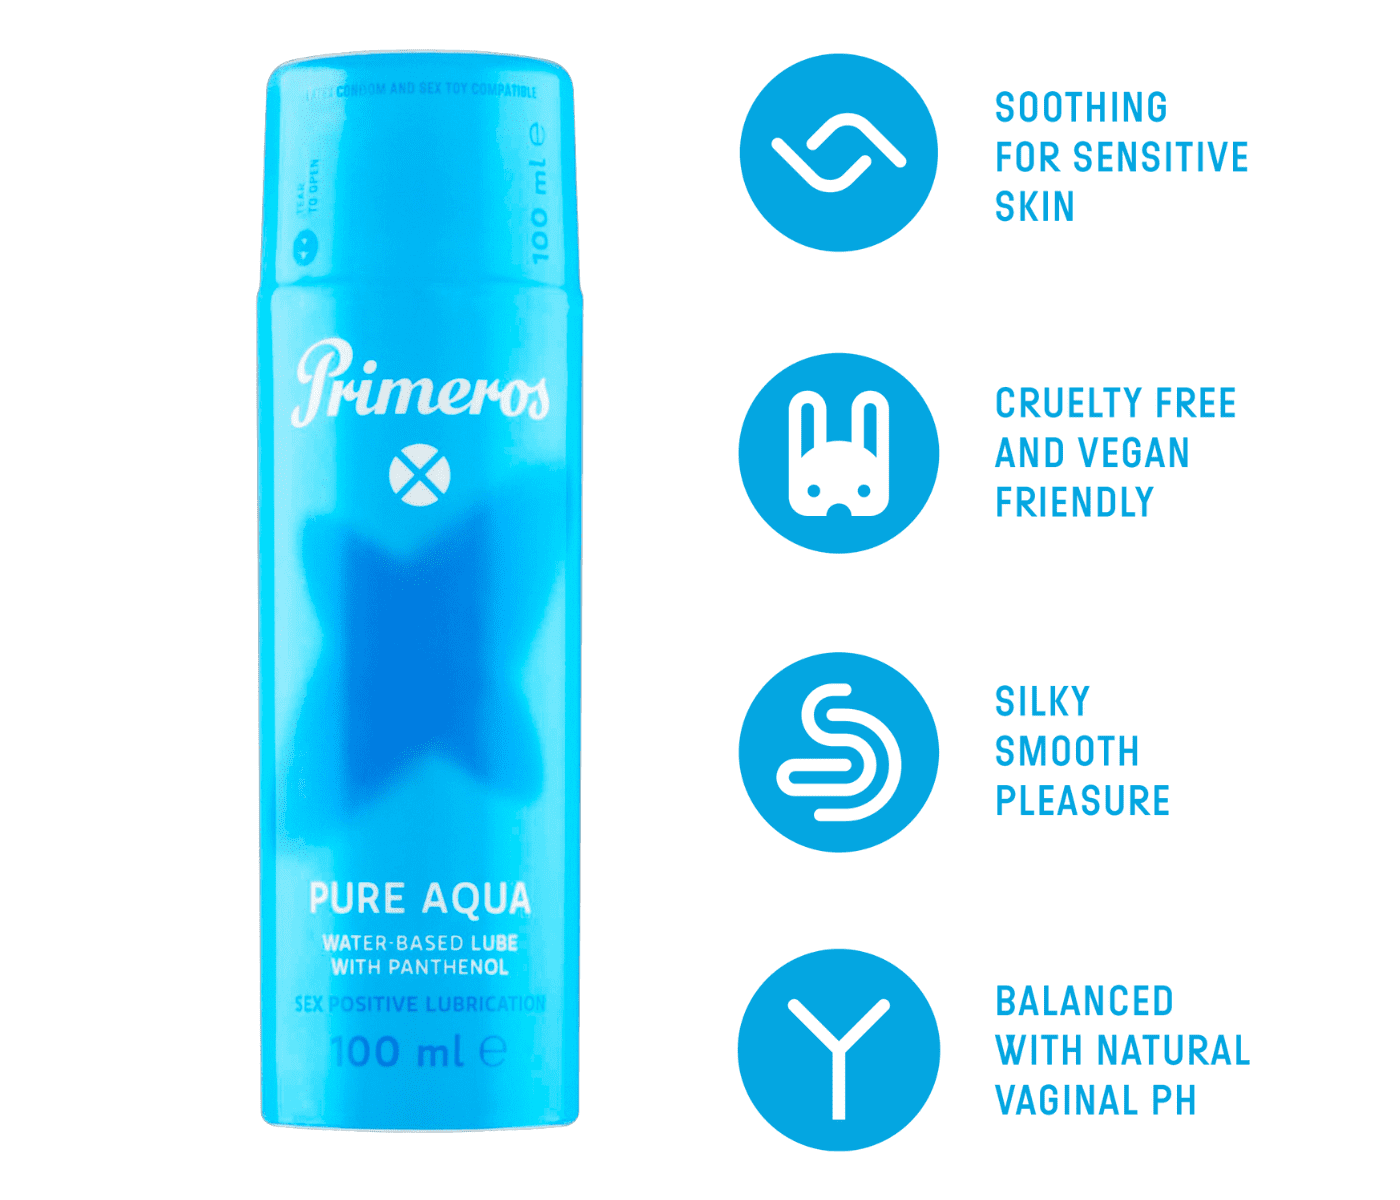 Primeros lubrikant Pure Aqua, kondomy Soft Glide a vibrační kroužek jako dárek zdarma